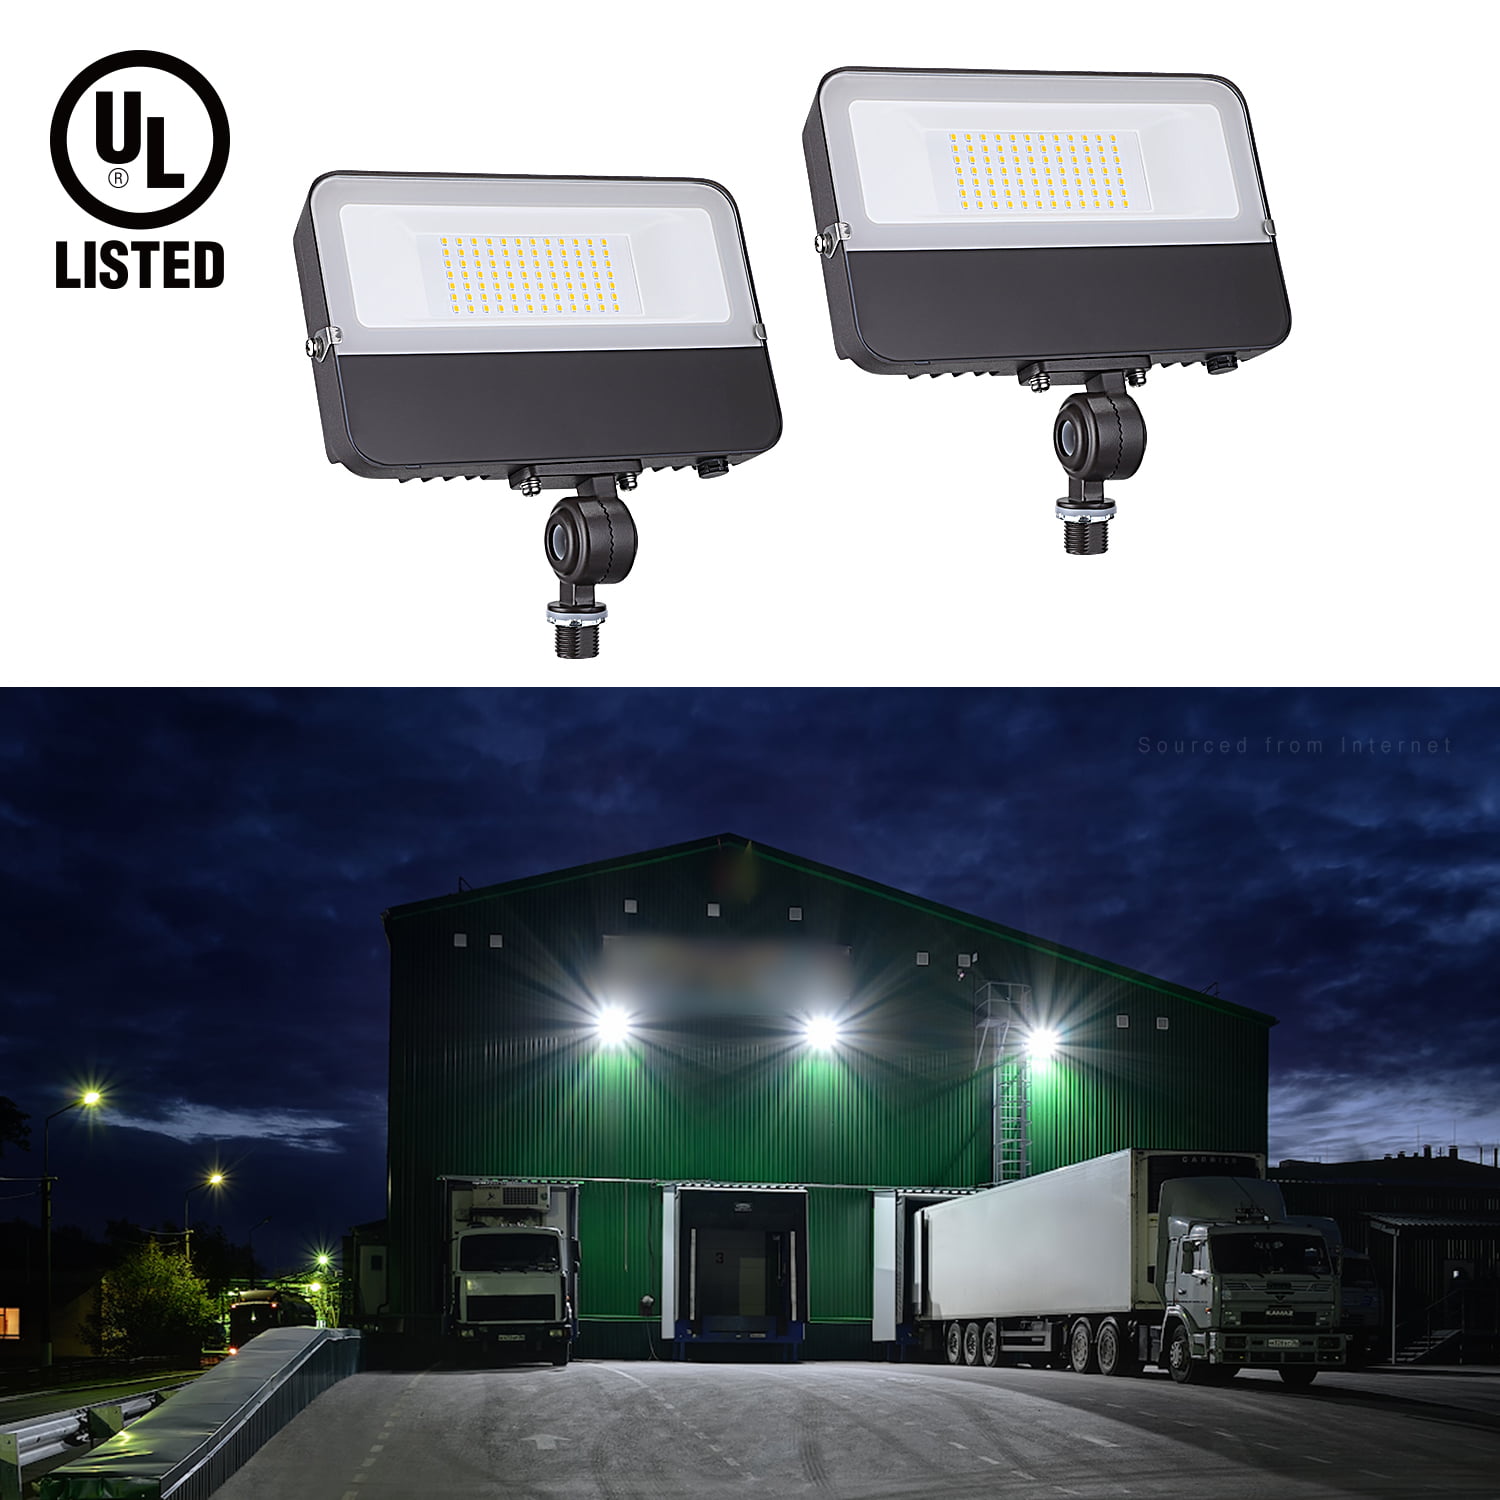 LEDMyplace 50W LED Flood Lights U-Bracket 6250 LM Super Bright 5700K IP65  Listed UL DLC Listed Outside Security Light for Garage Playground Yard  Patio